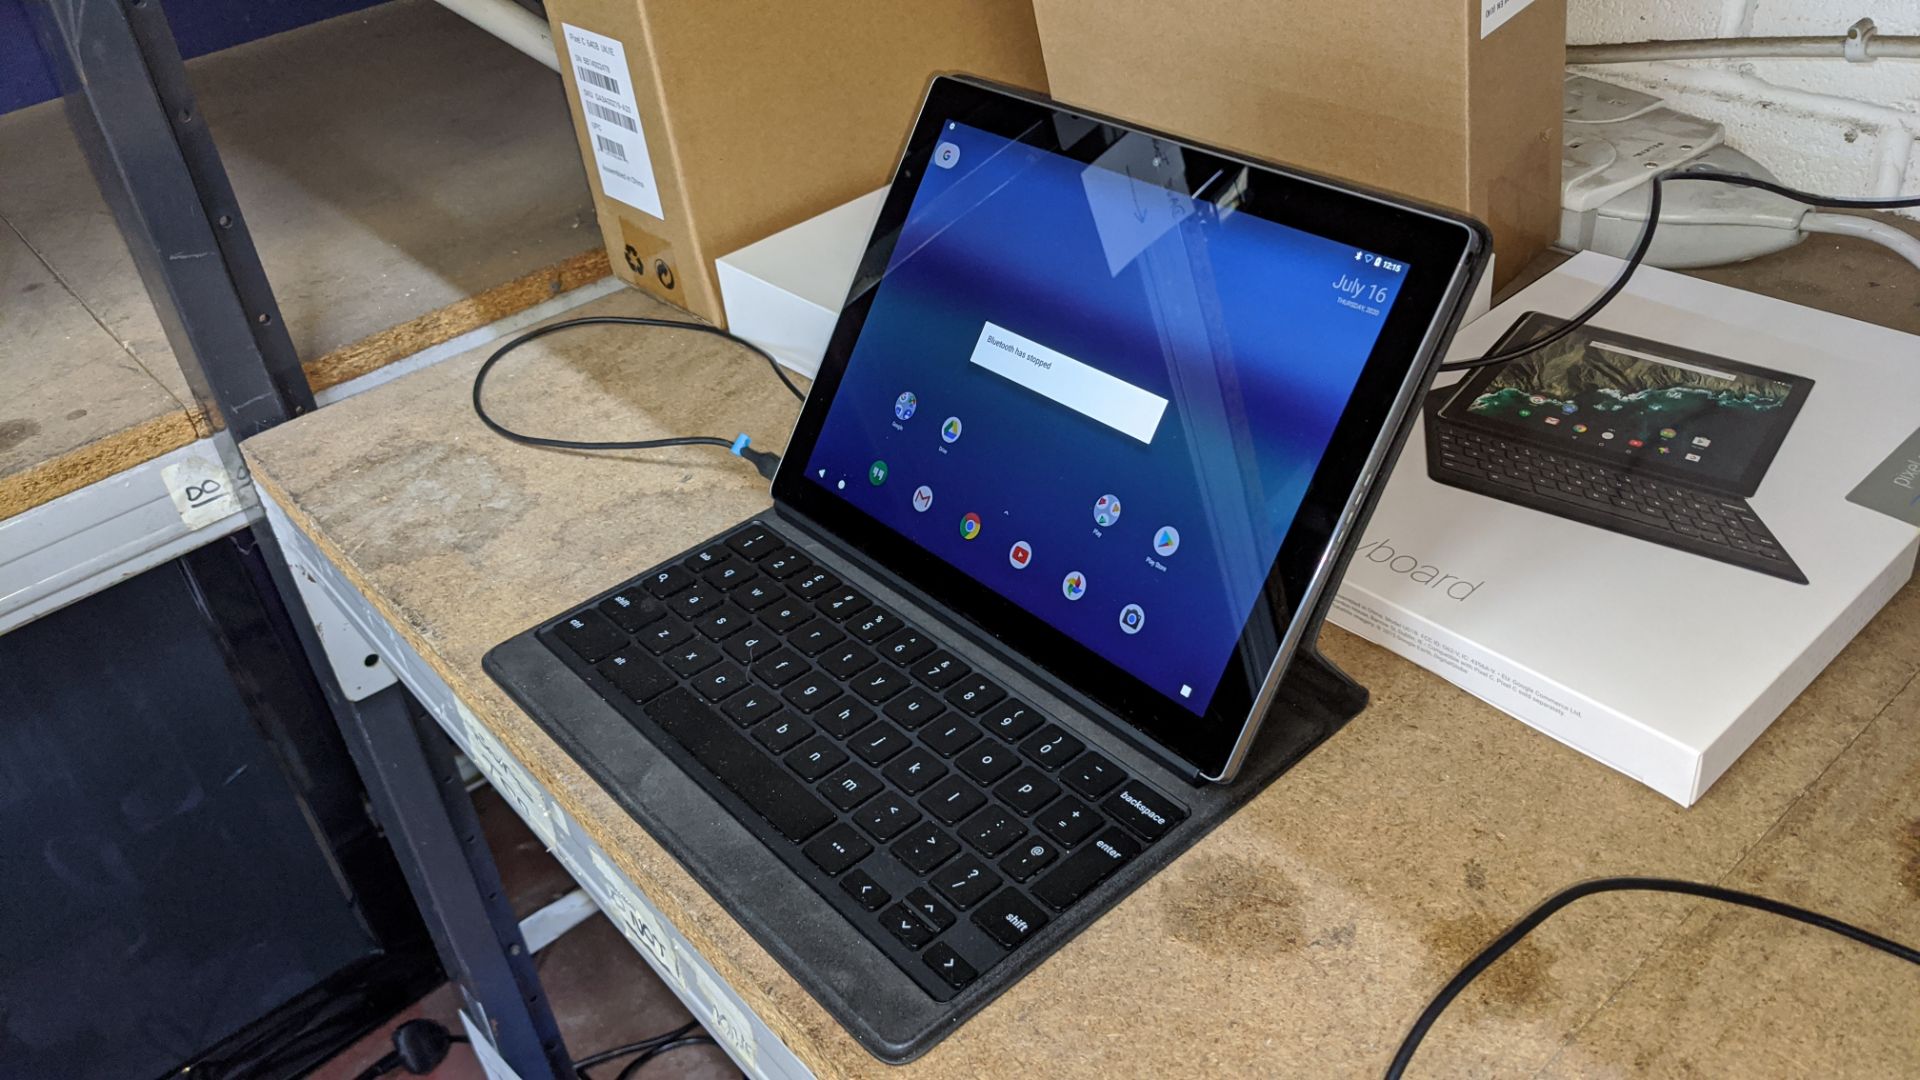 Google Pixel C 64GB tablet, 10.2", model C1502W, with optional Folio keyboard/case model UG1B. Incl - Image 3 of 25